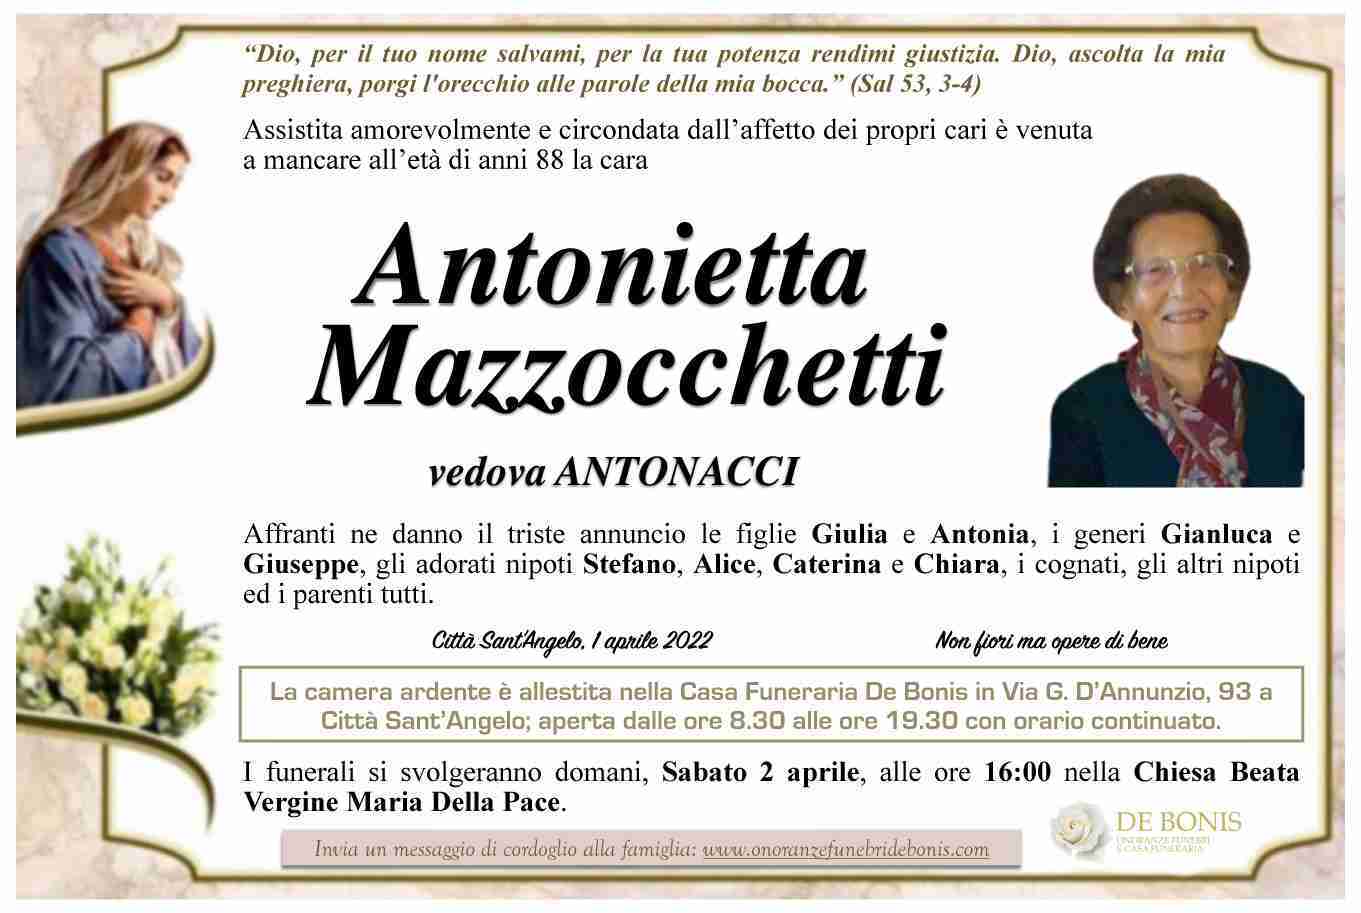 Antonietta Mazzocchetti